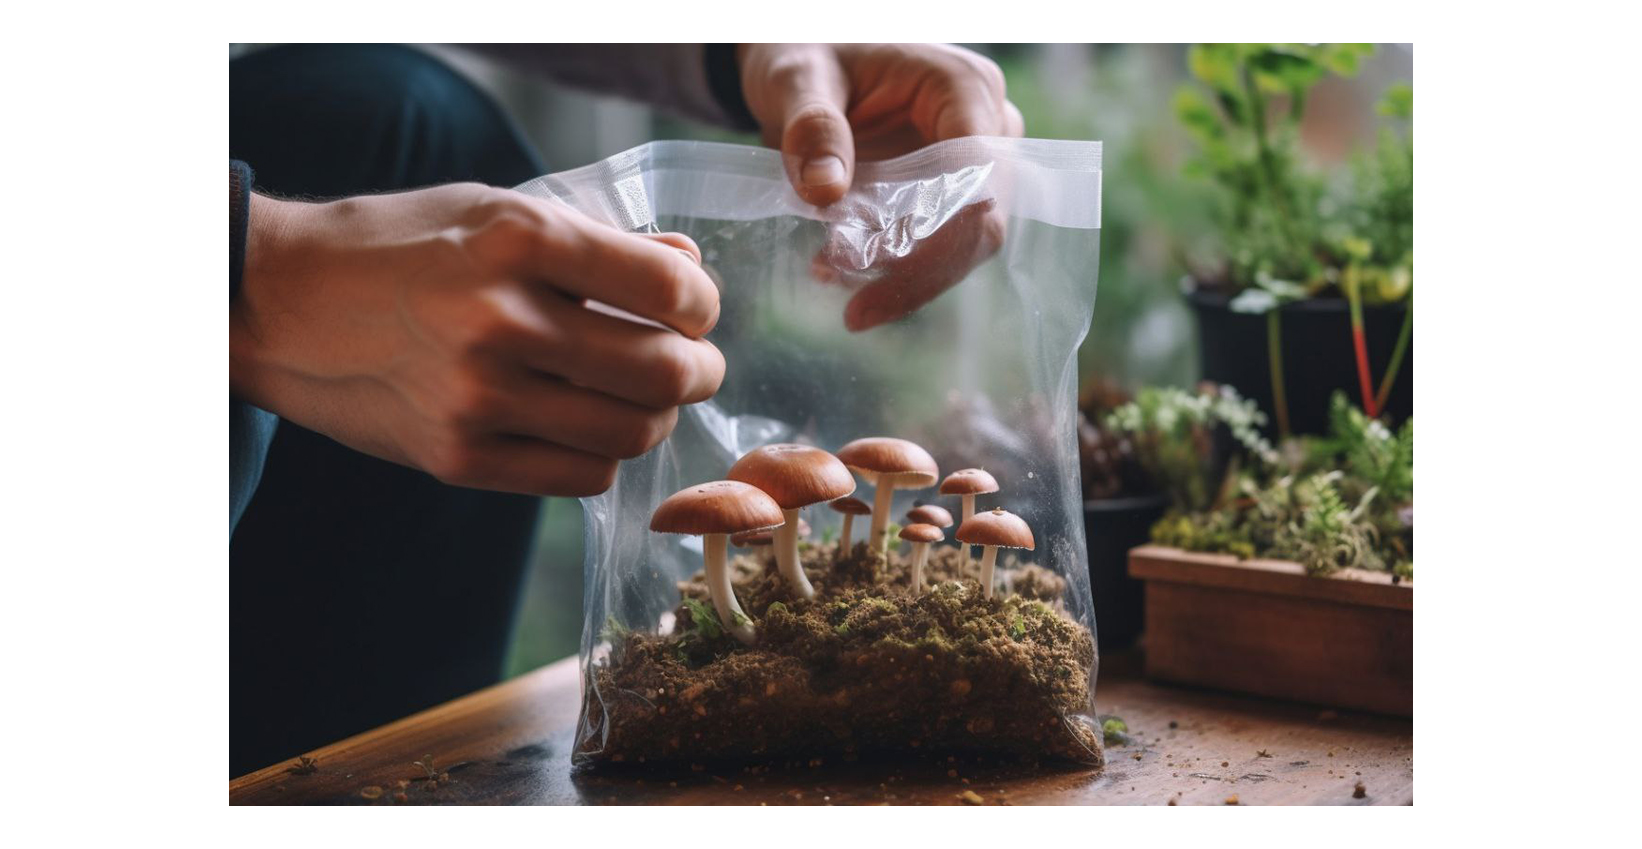 A man opening a bag of magic mushroom grow kit